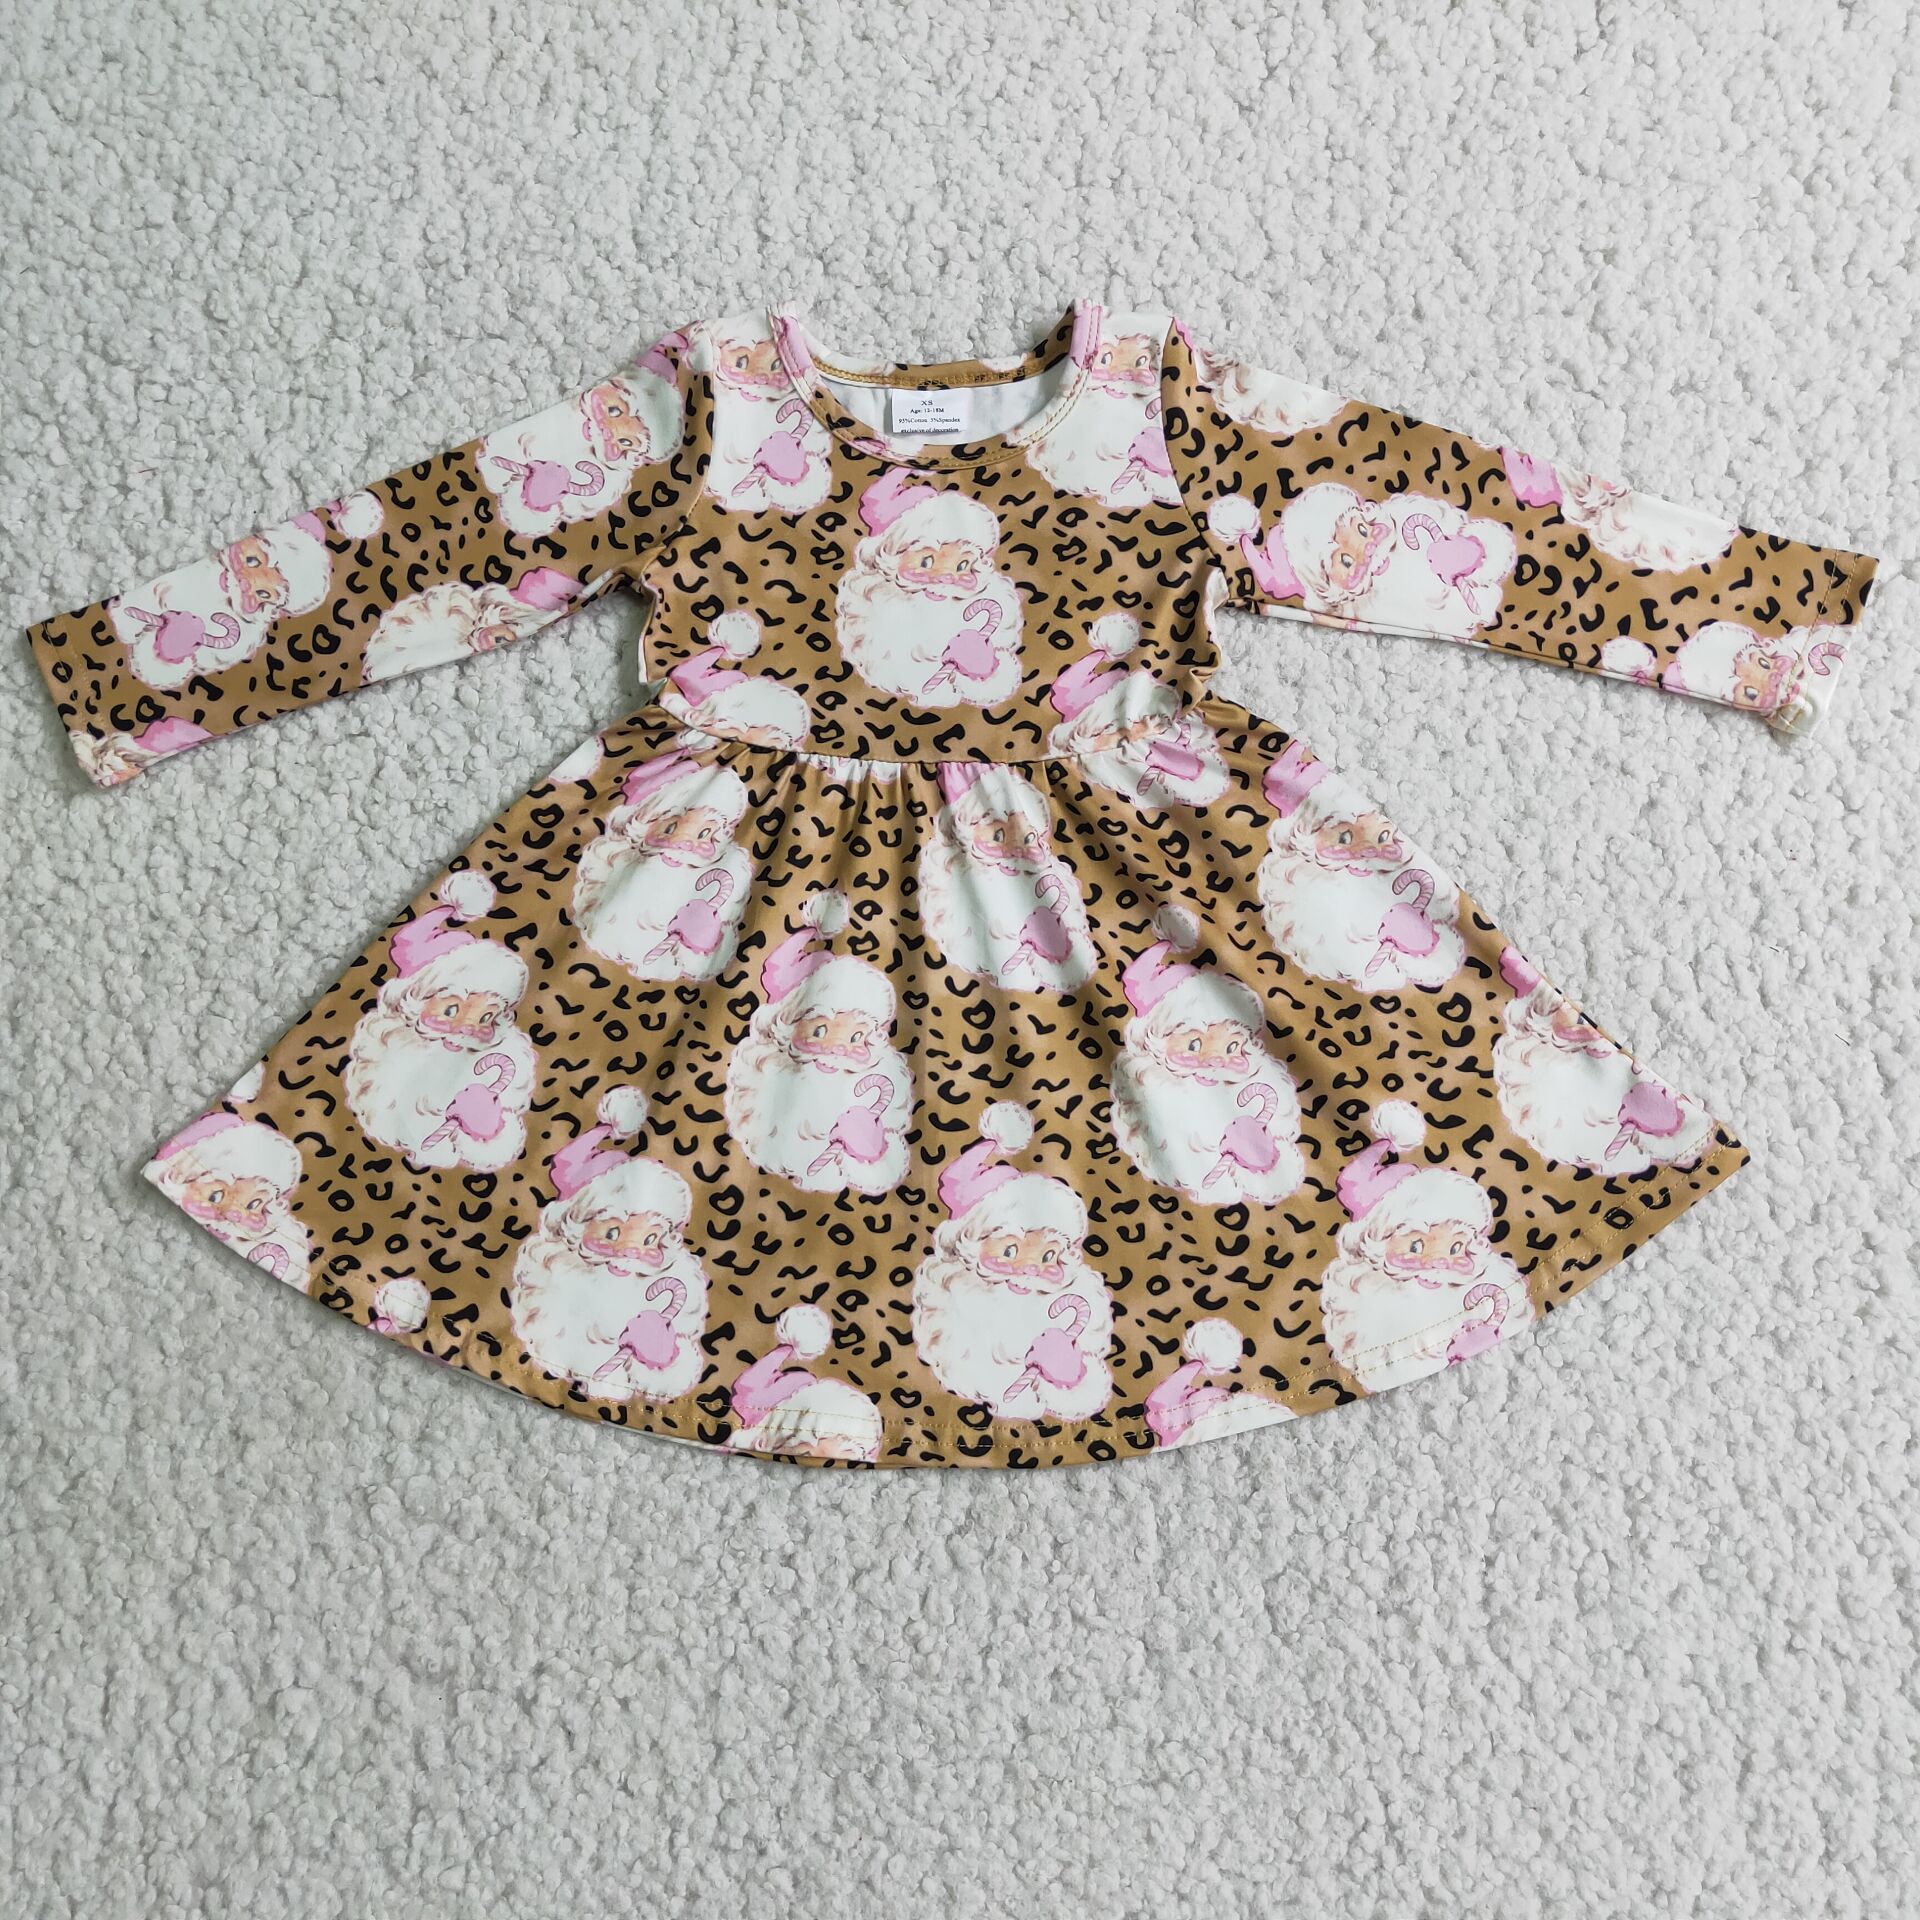 6 A7-13 baby girl clothes santa claus leopard dress